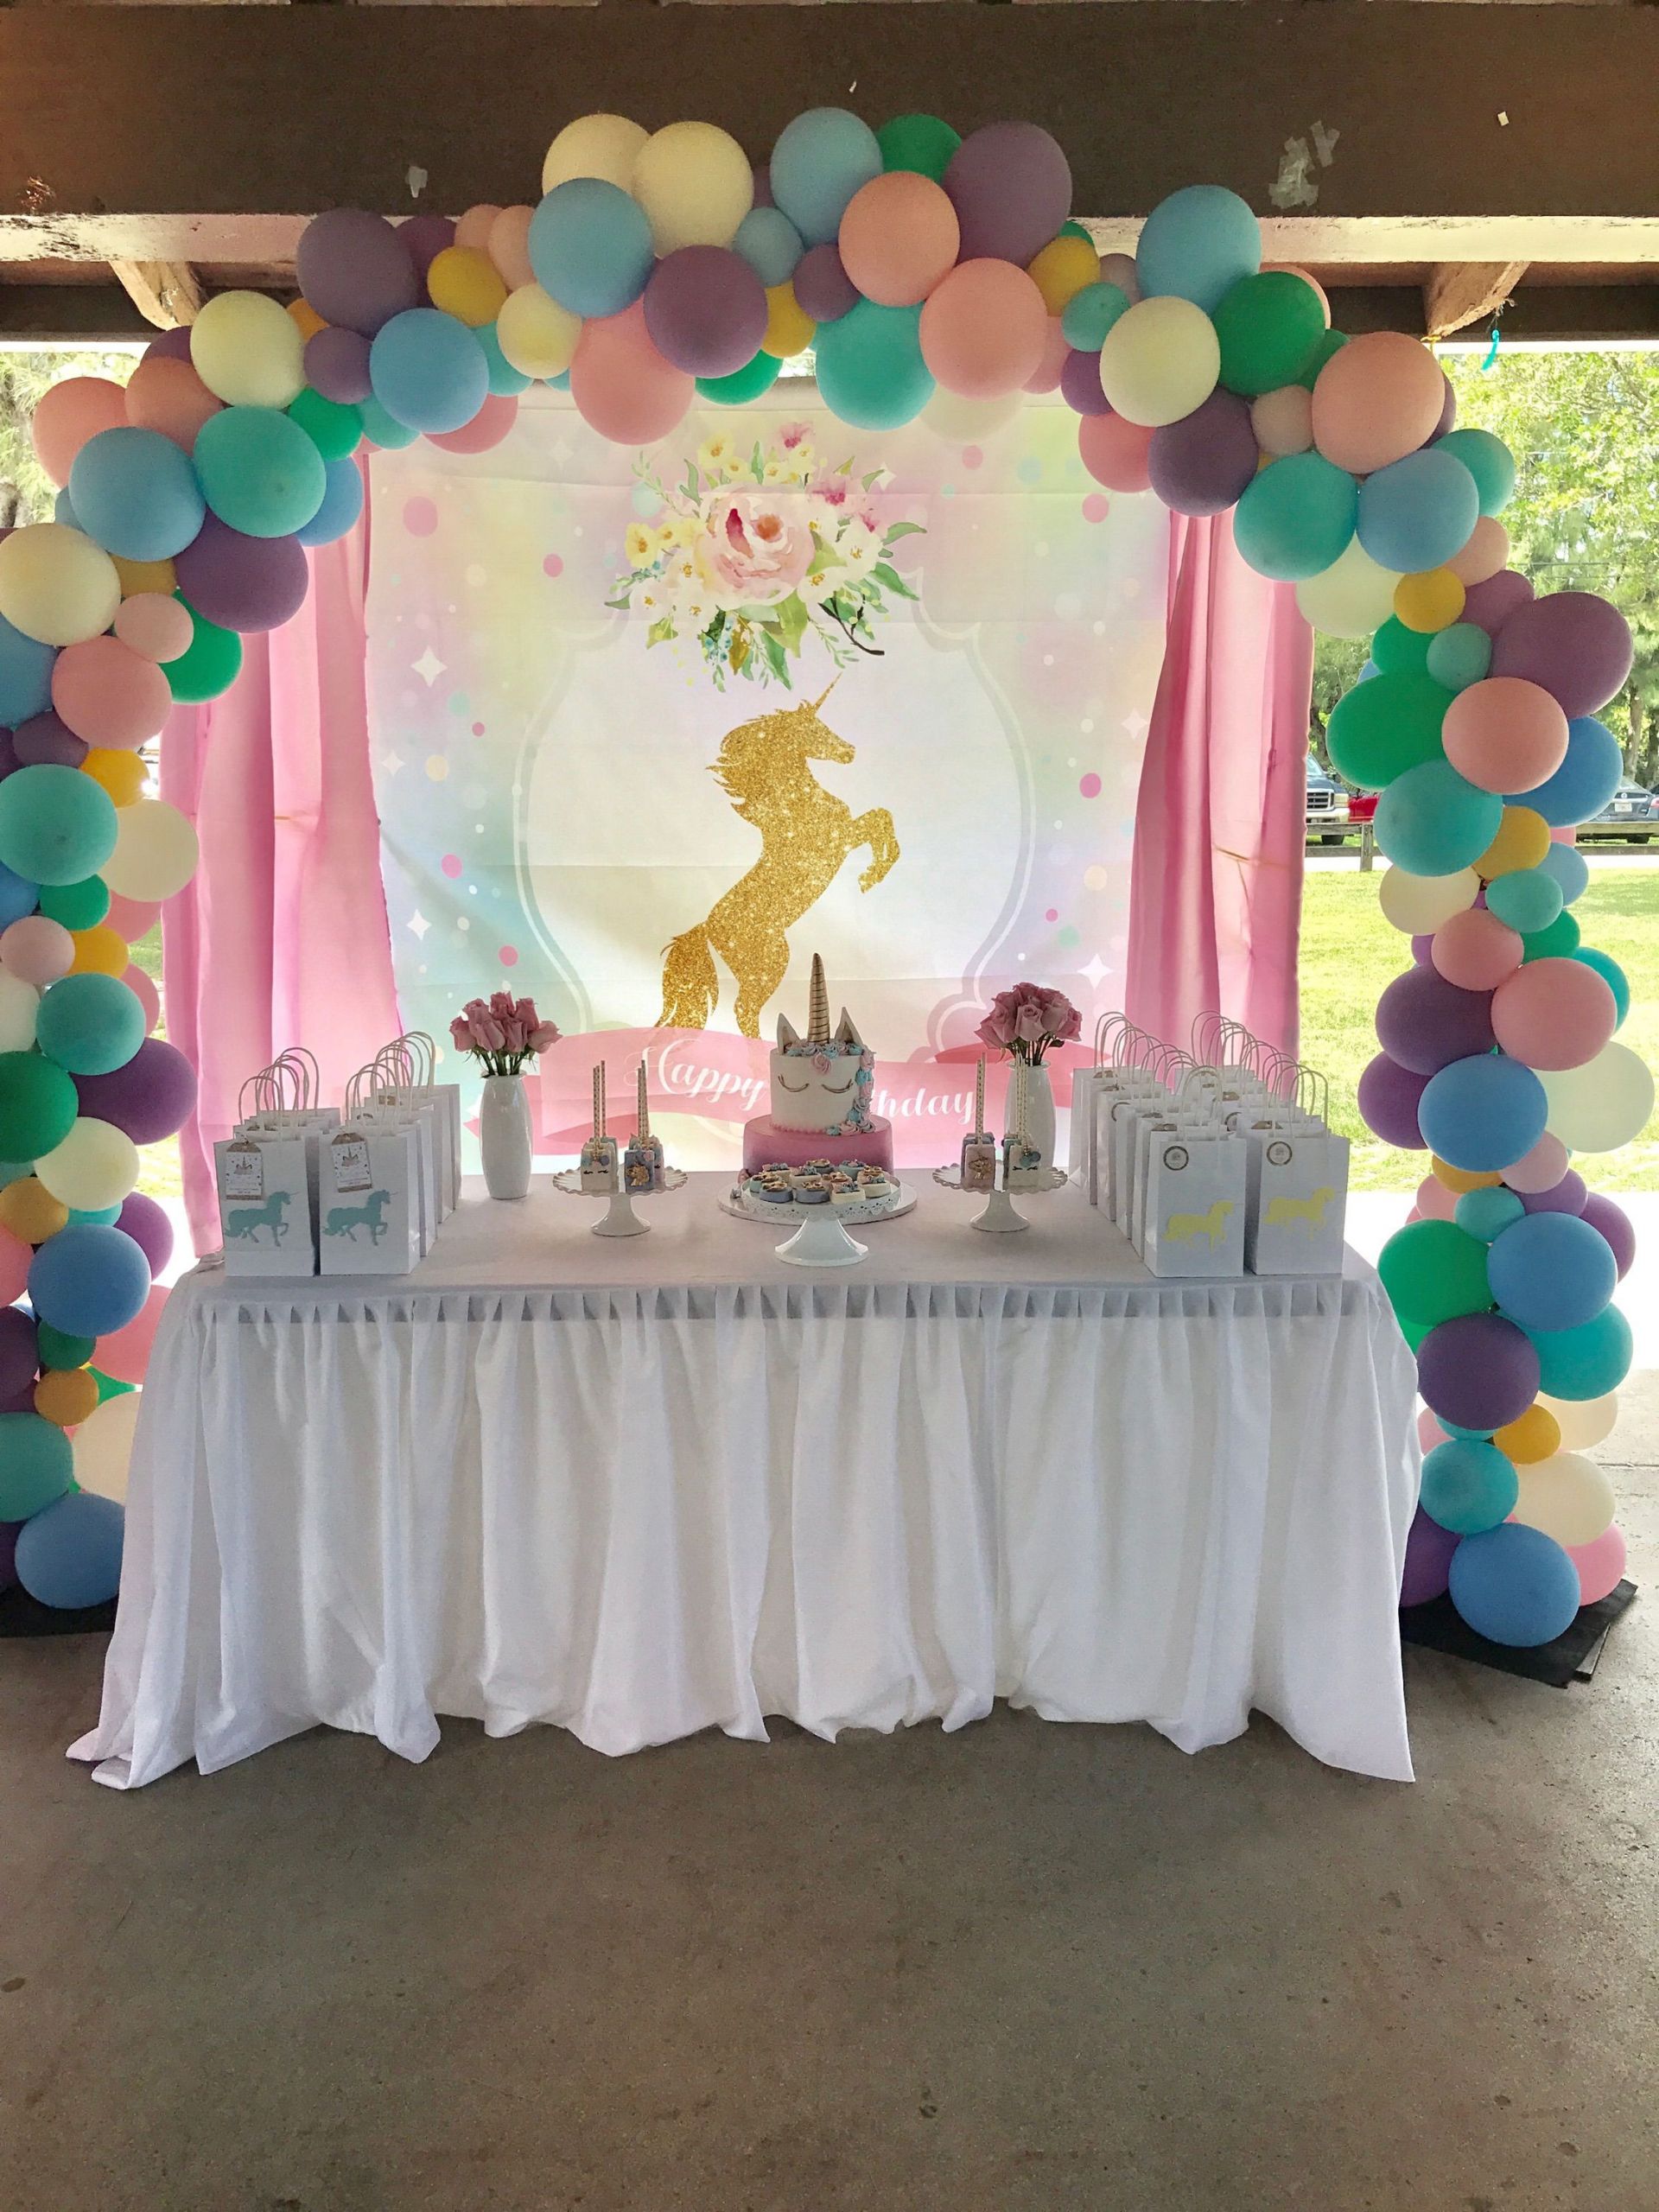 Unicorn Birthday Party Decorations Ideas
 Unicorn Birthday Party by Premiere Party Rental in 2019